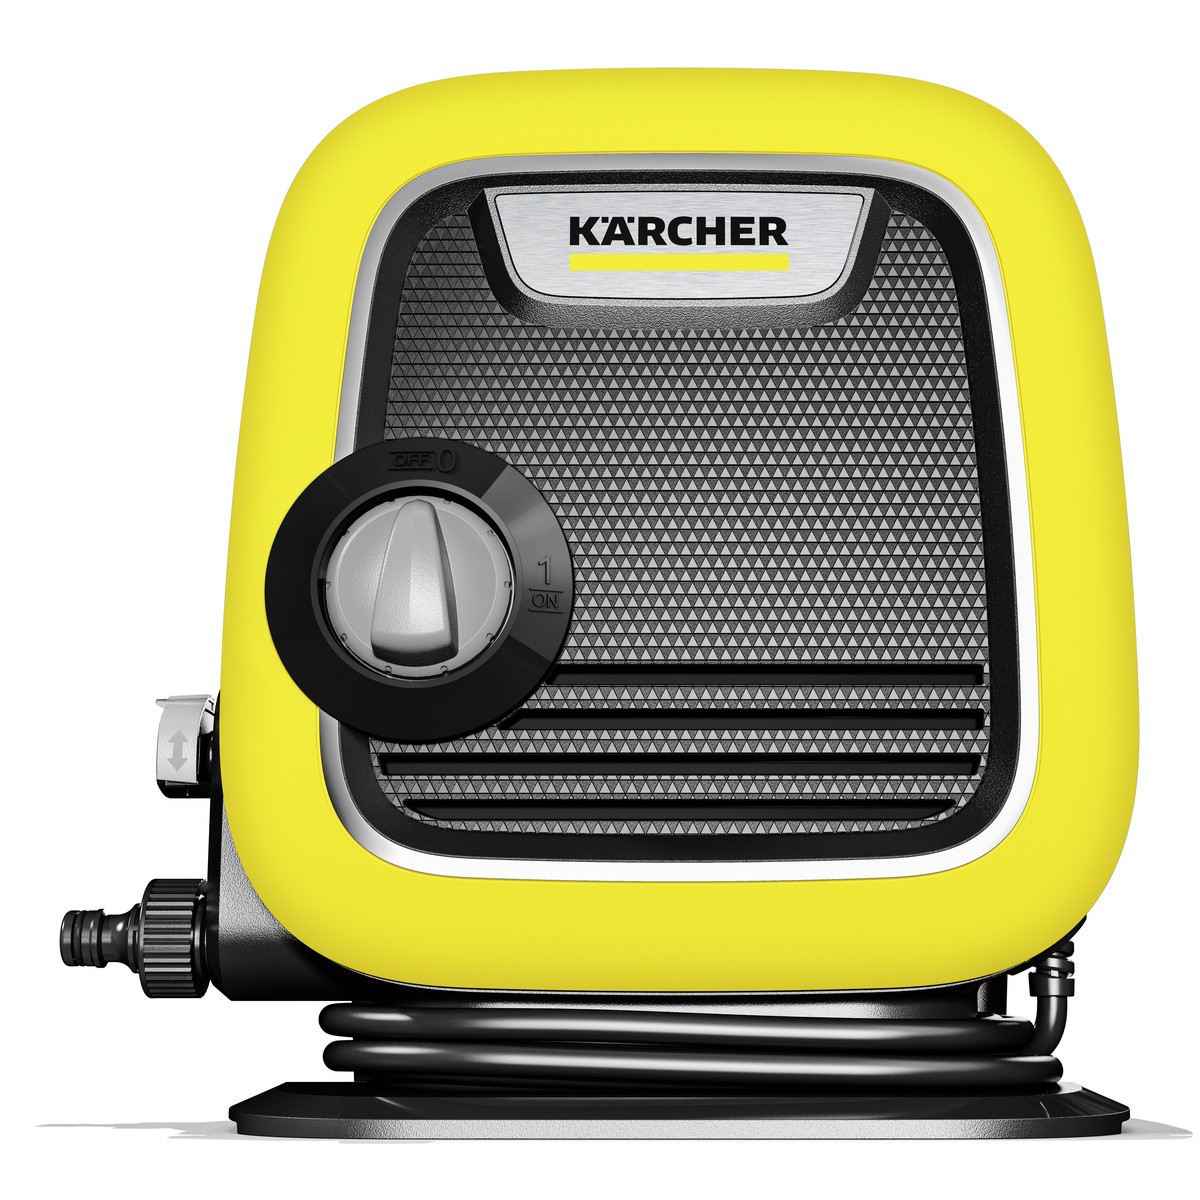  Karcher K Mini (Керхер K Mini) высокого давления  в Минске